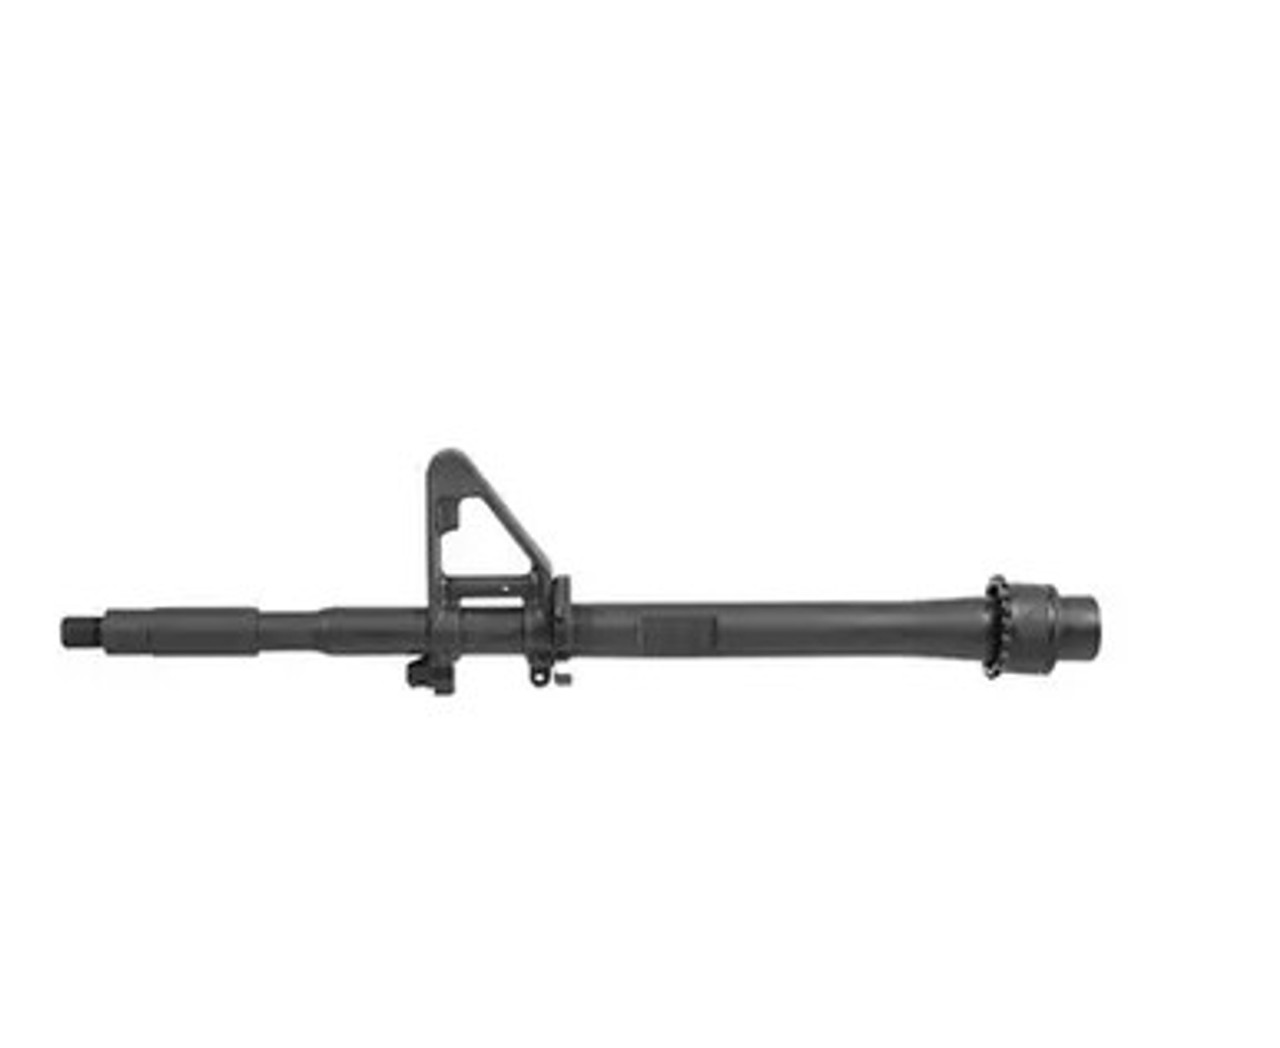 Colt M4 14.5 inch 5.56mm SOCOM Barrel Assembly w/ Fixed Front Sight